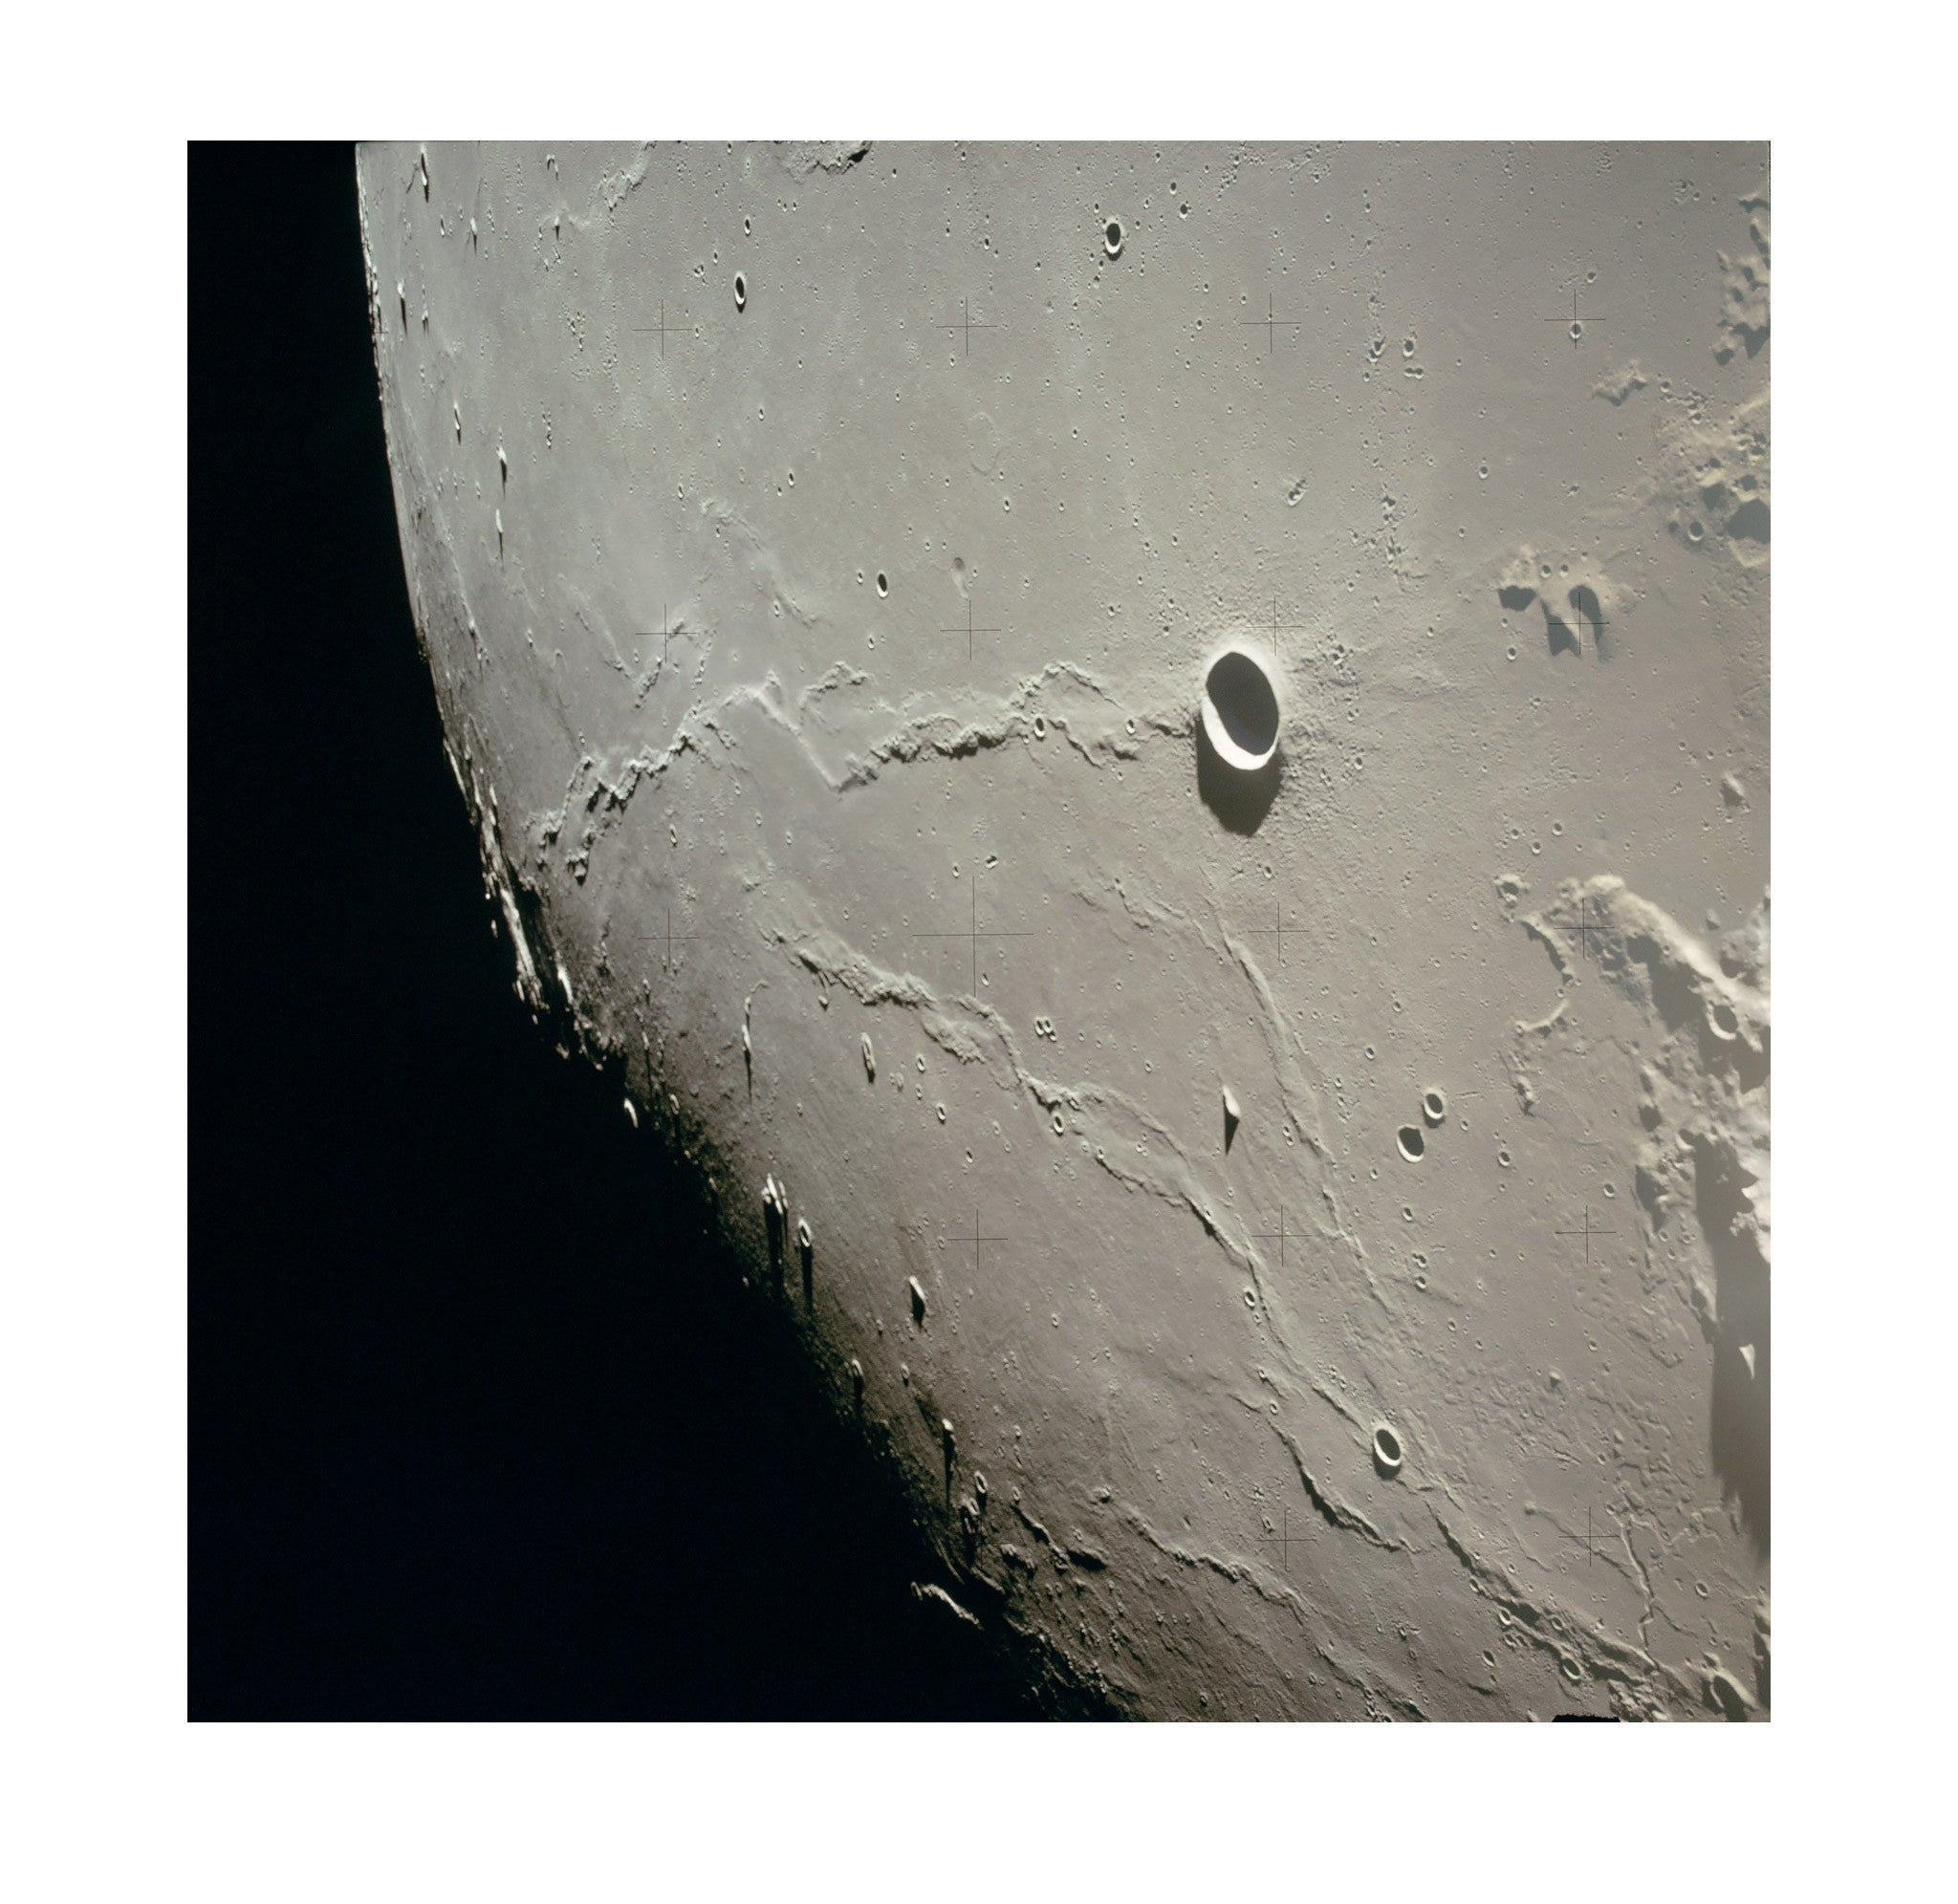 Apollo 15 – Crater